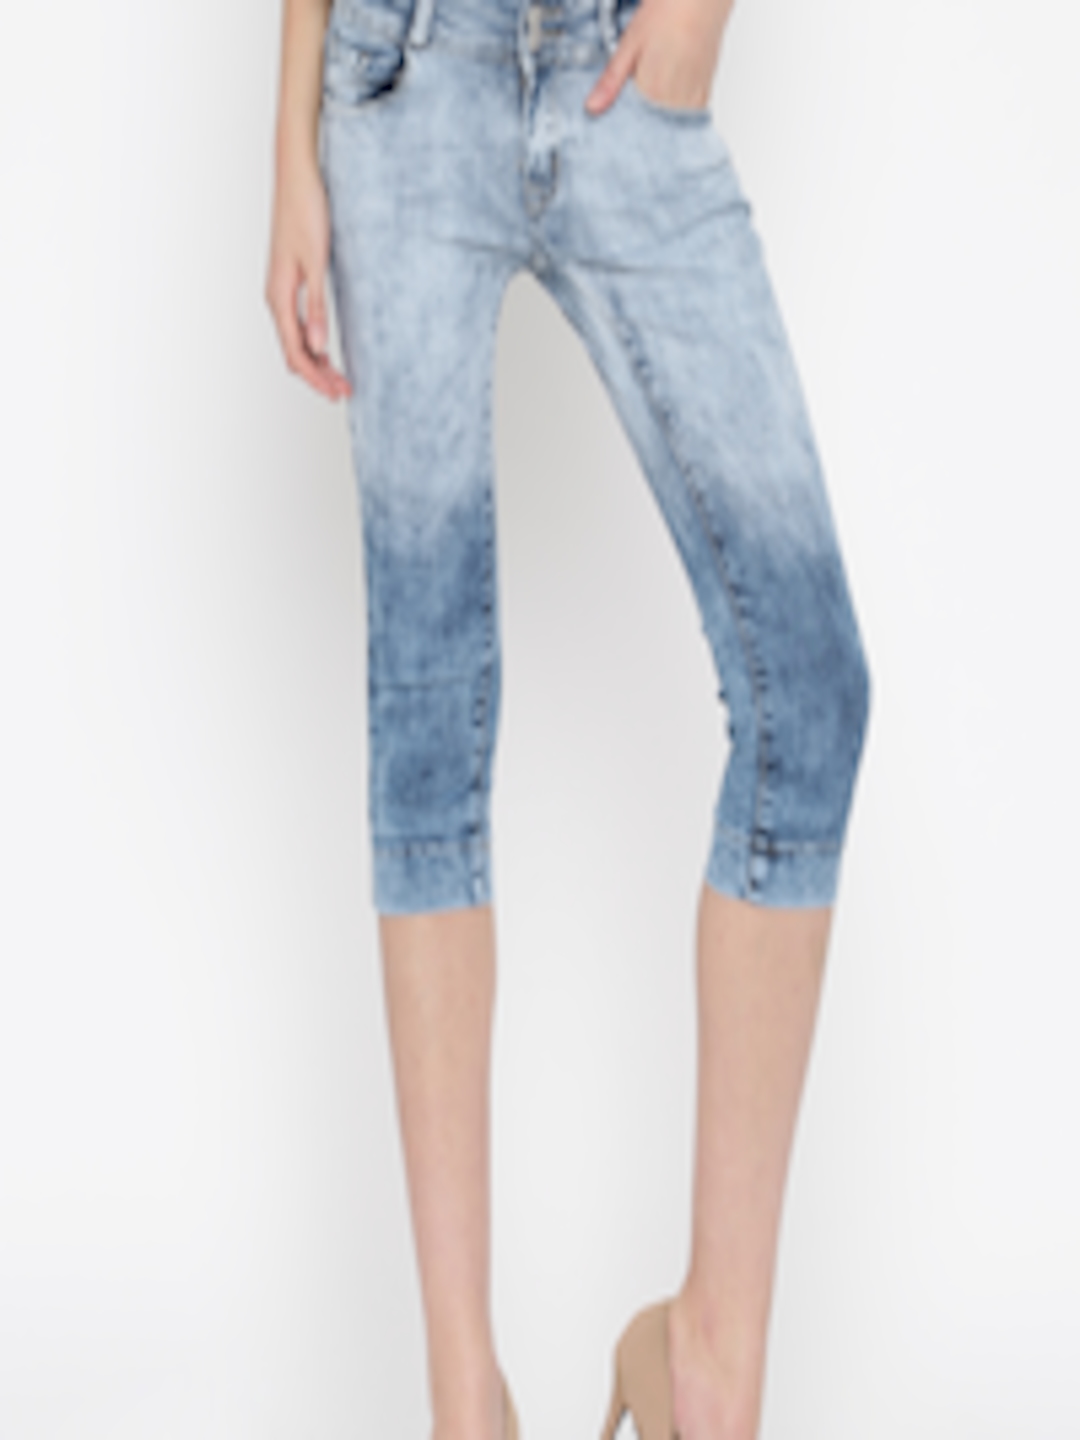 Buy Deal Jeans Blue Denim Capris - Capris for Women 1742192 | Myntra